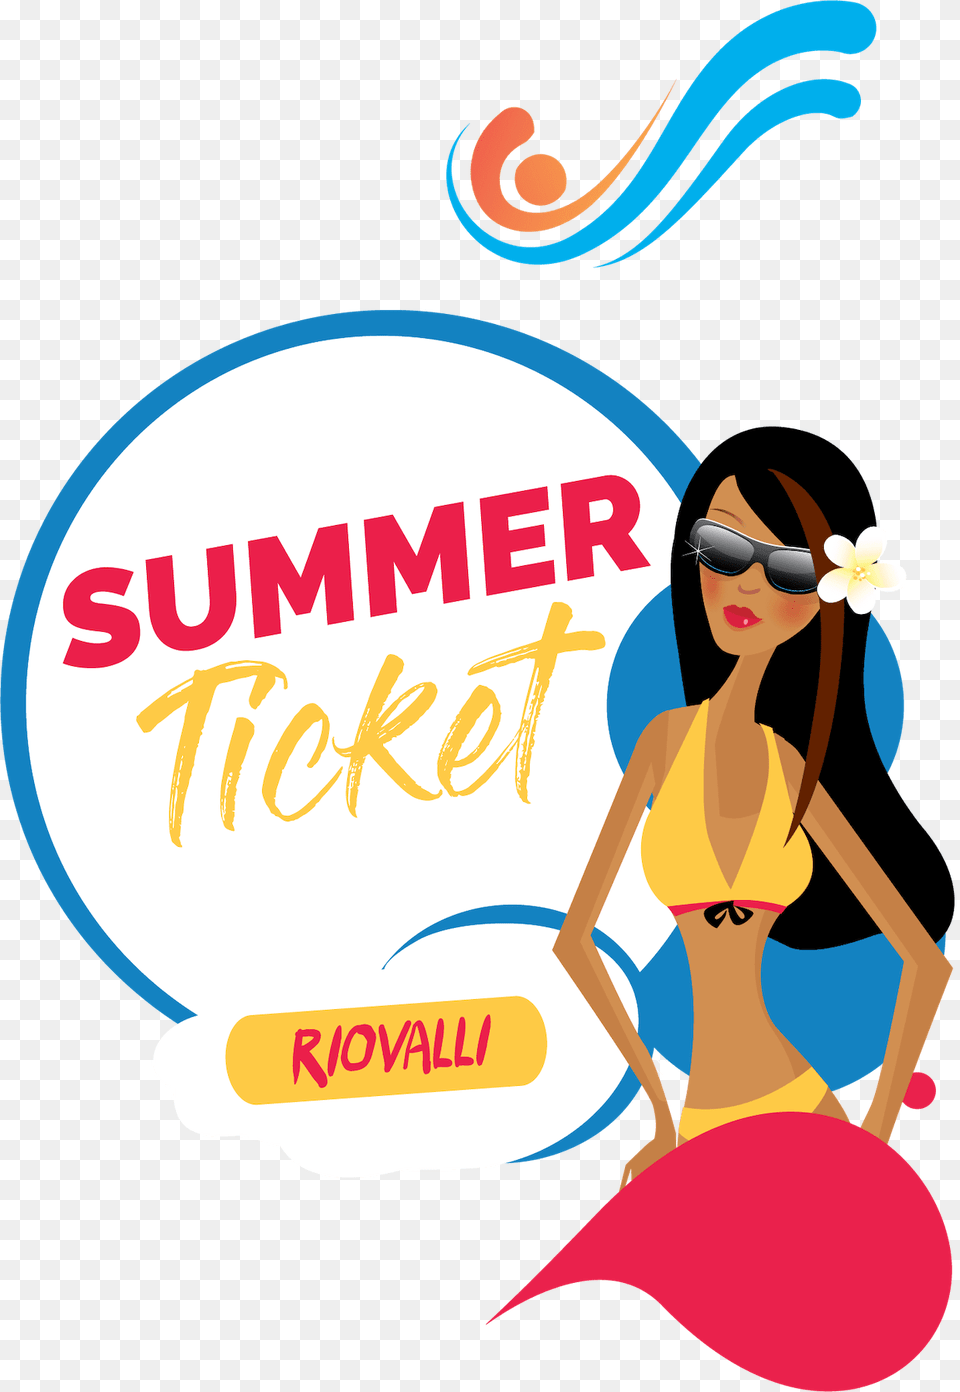 Summer Ticket Transparent Cartoons, Accessories, Advertisement, Sunglasses, Swimwear Png